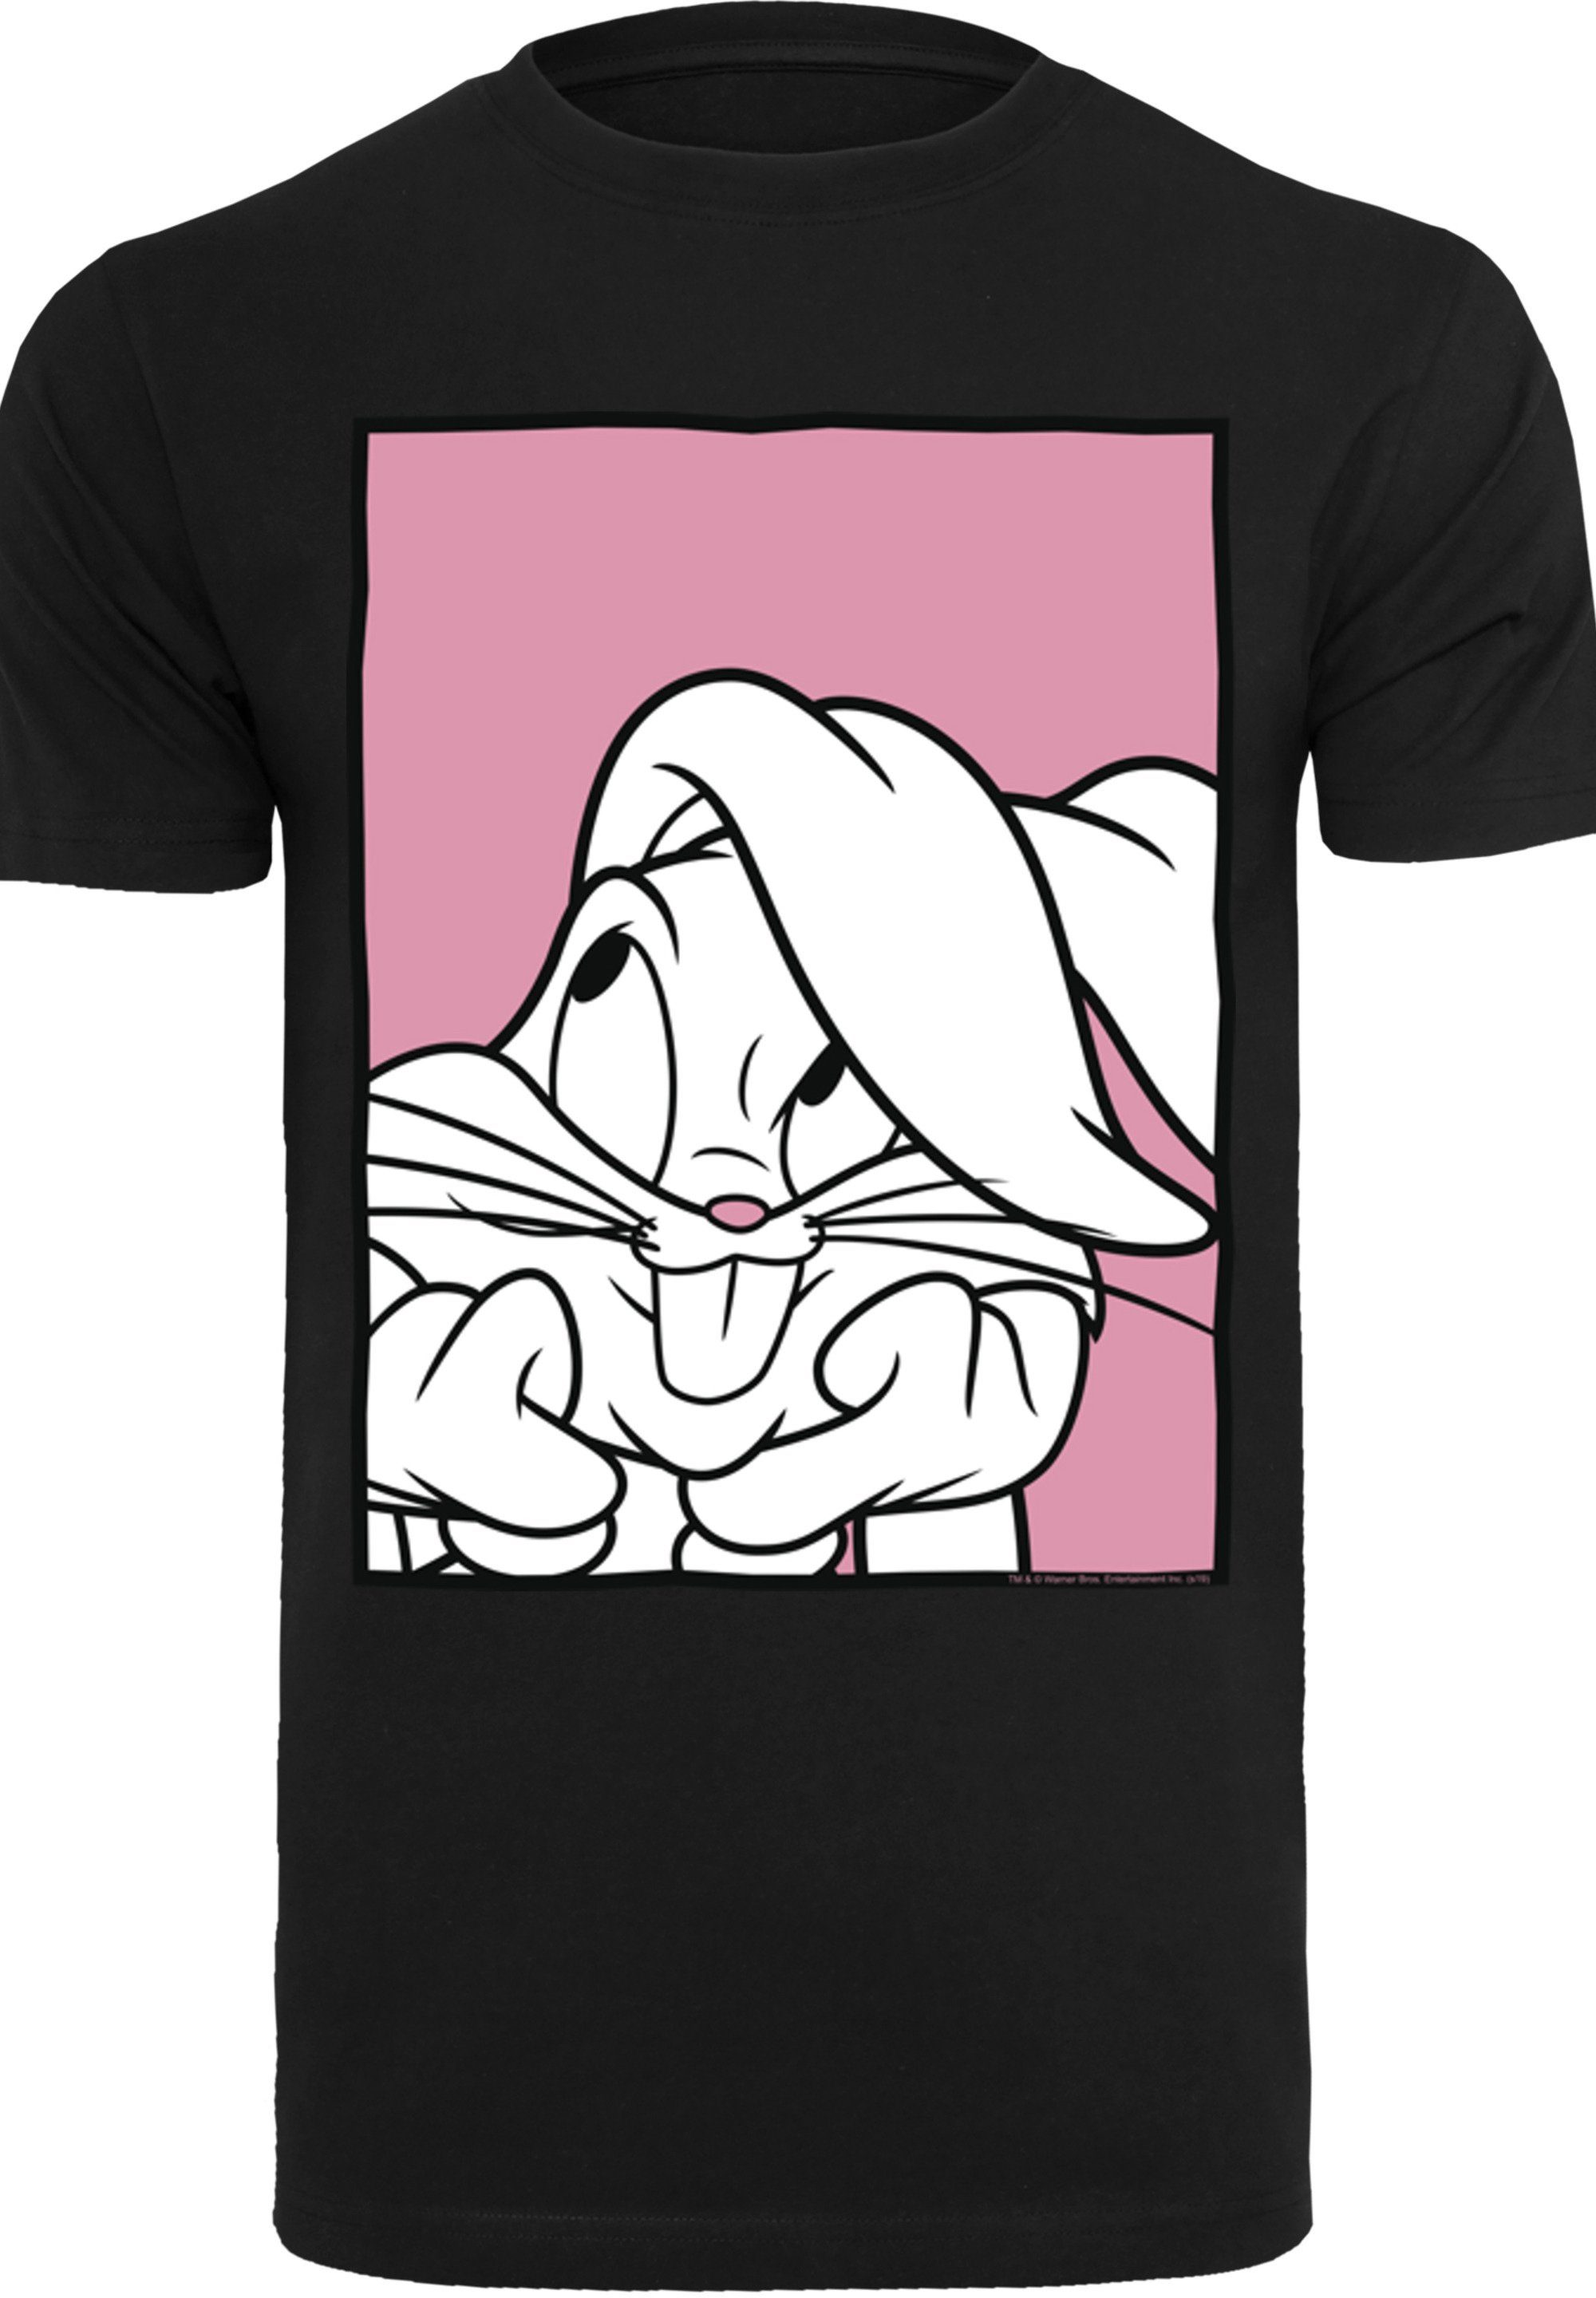 Tunes Adore schwarz F4NT4STIC Print T-Shirt Looney Bunny Bugs